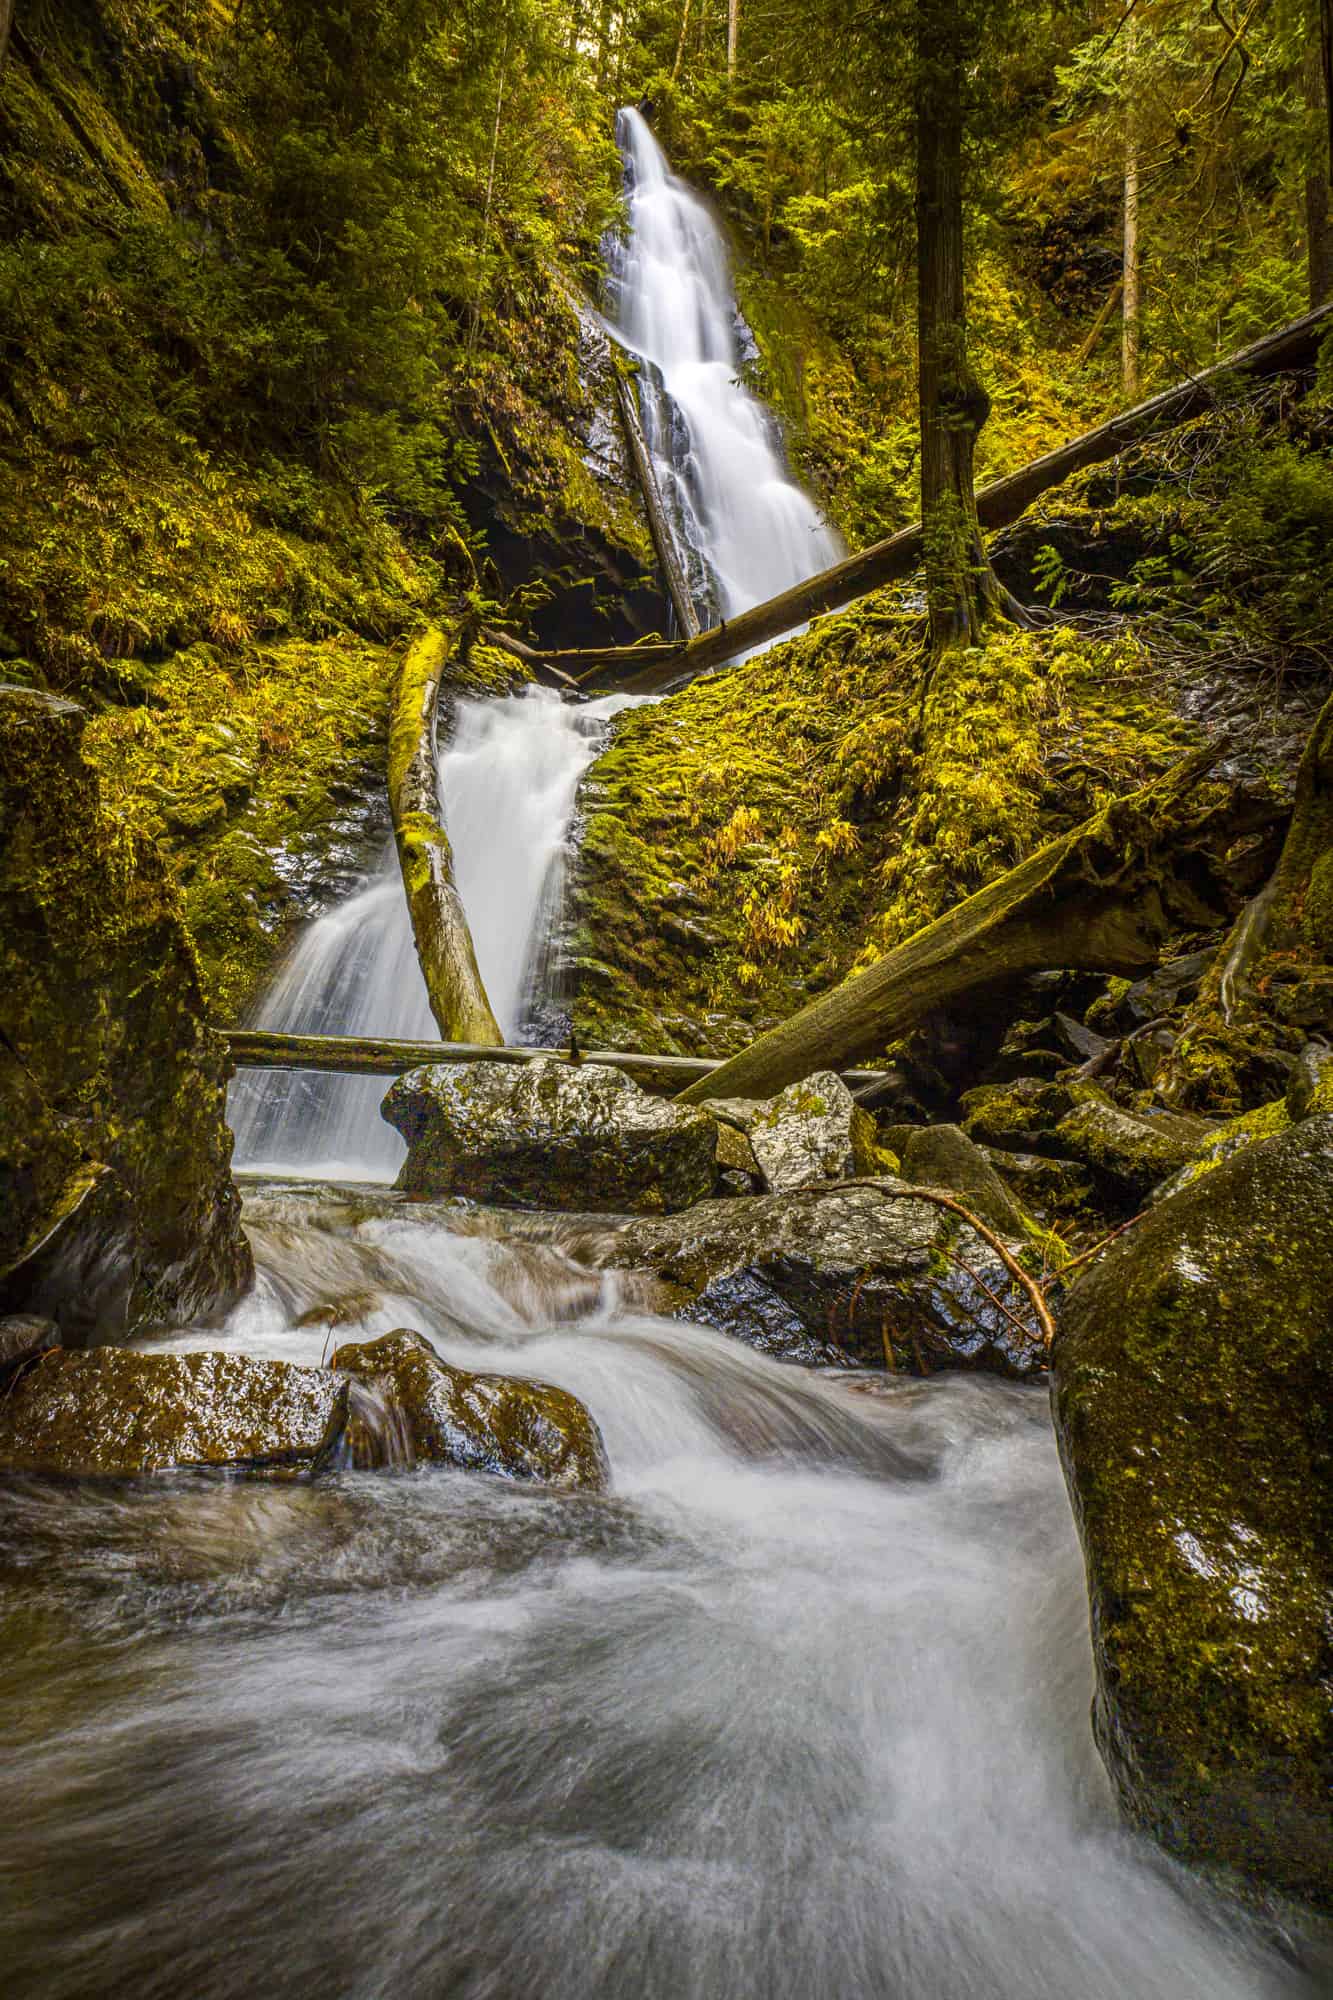 murhut falls flowing between mossy rocks and green foliage